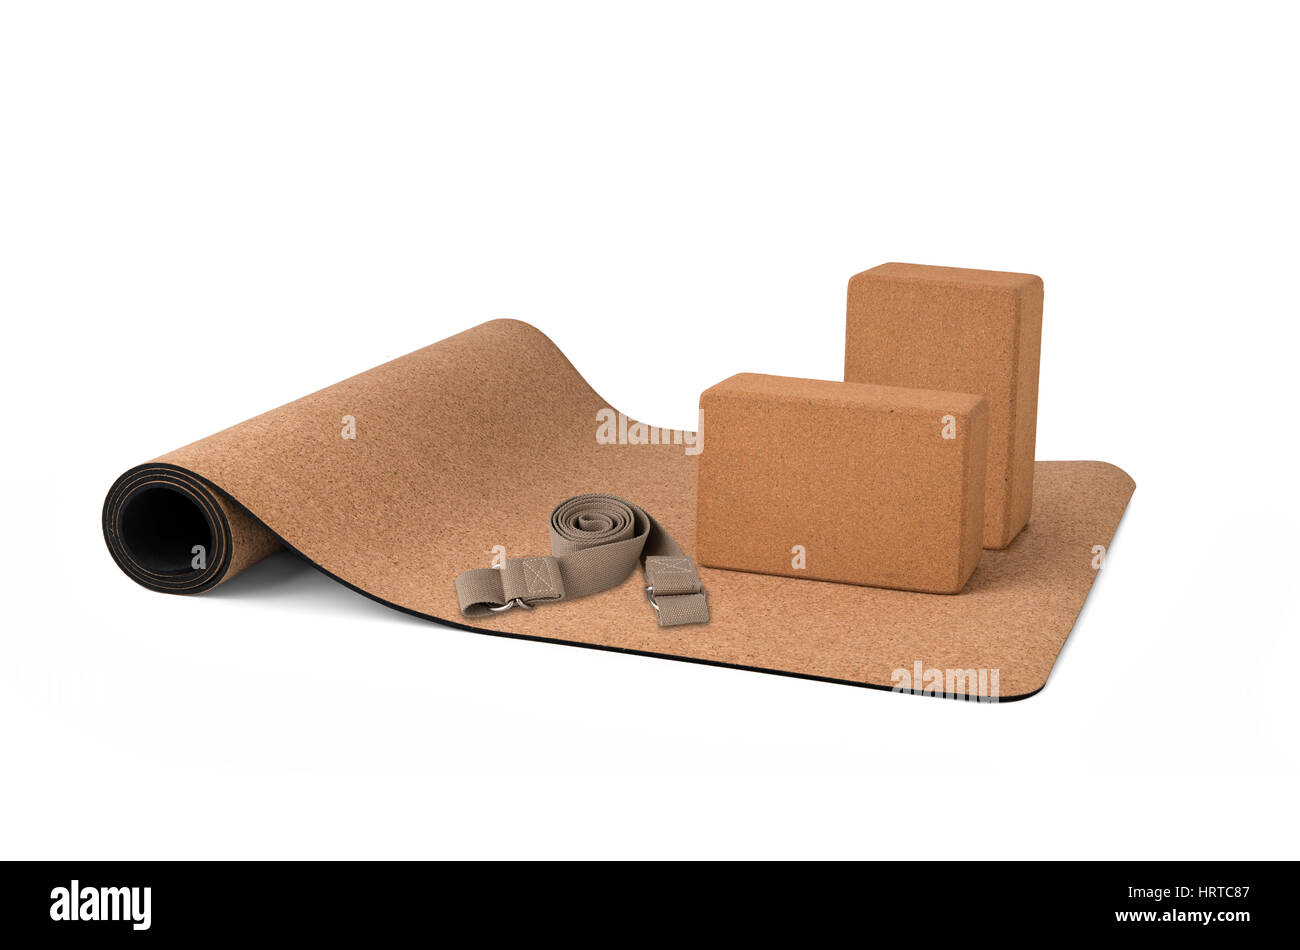 Cork Yoga Mat Set With Blocks and Strap, Premium Eco Friendly Product on White Background Stock Photo